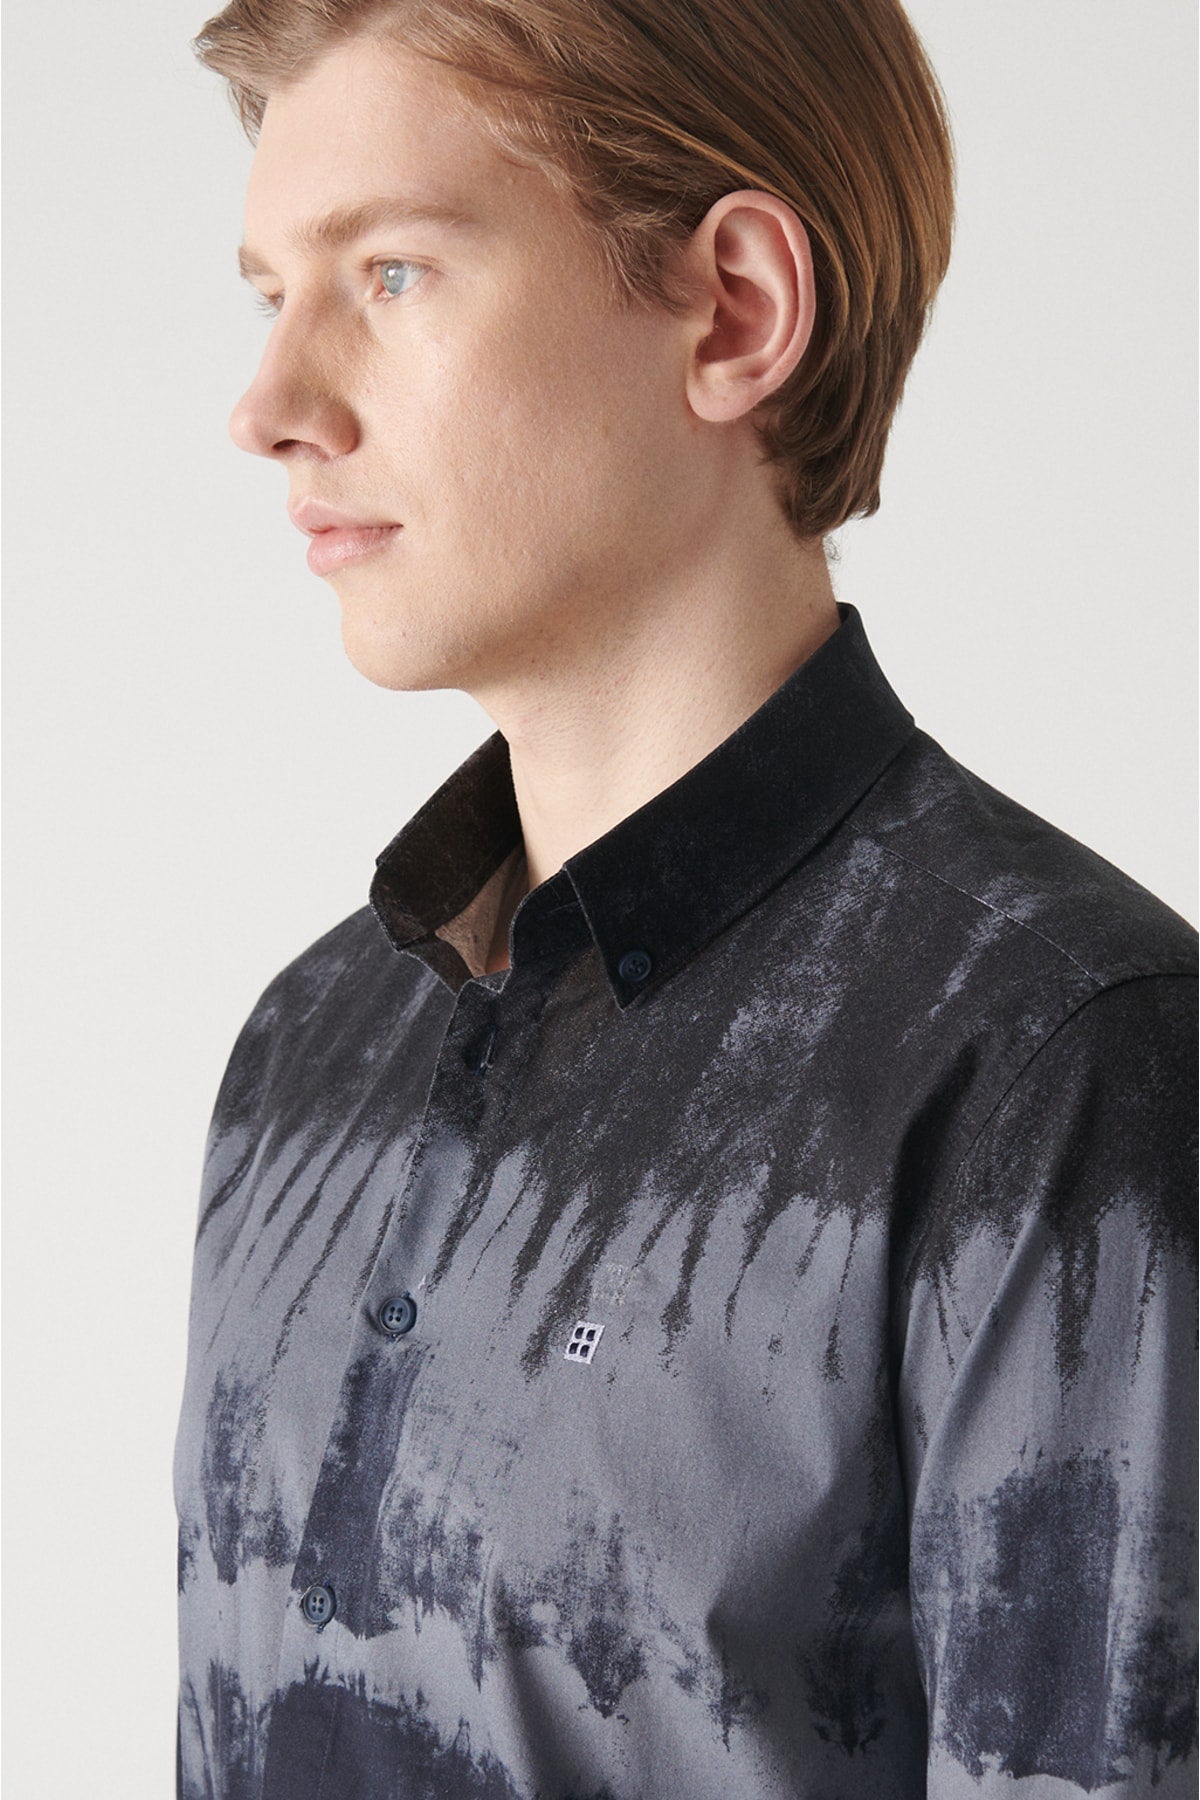 Men's Navy Blue Printed buttoned Neck 100 %Cotton Slim Fit Shirt A22Y2070